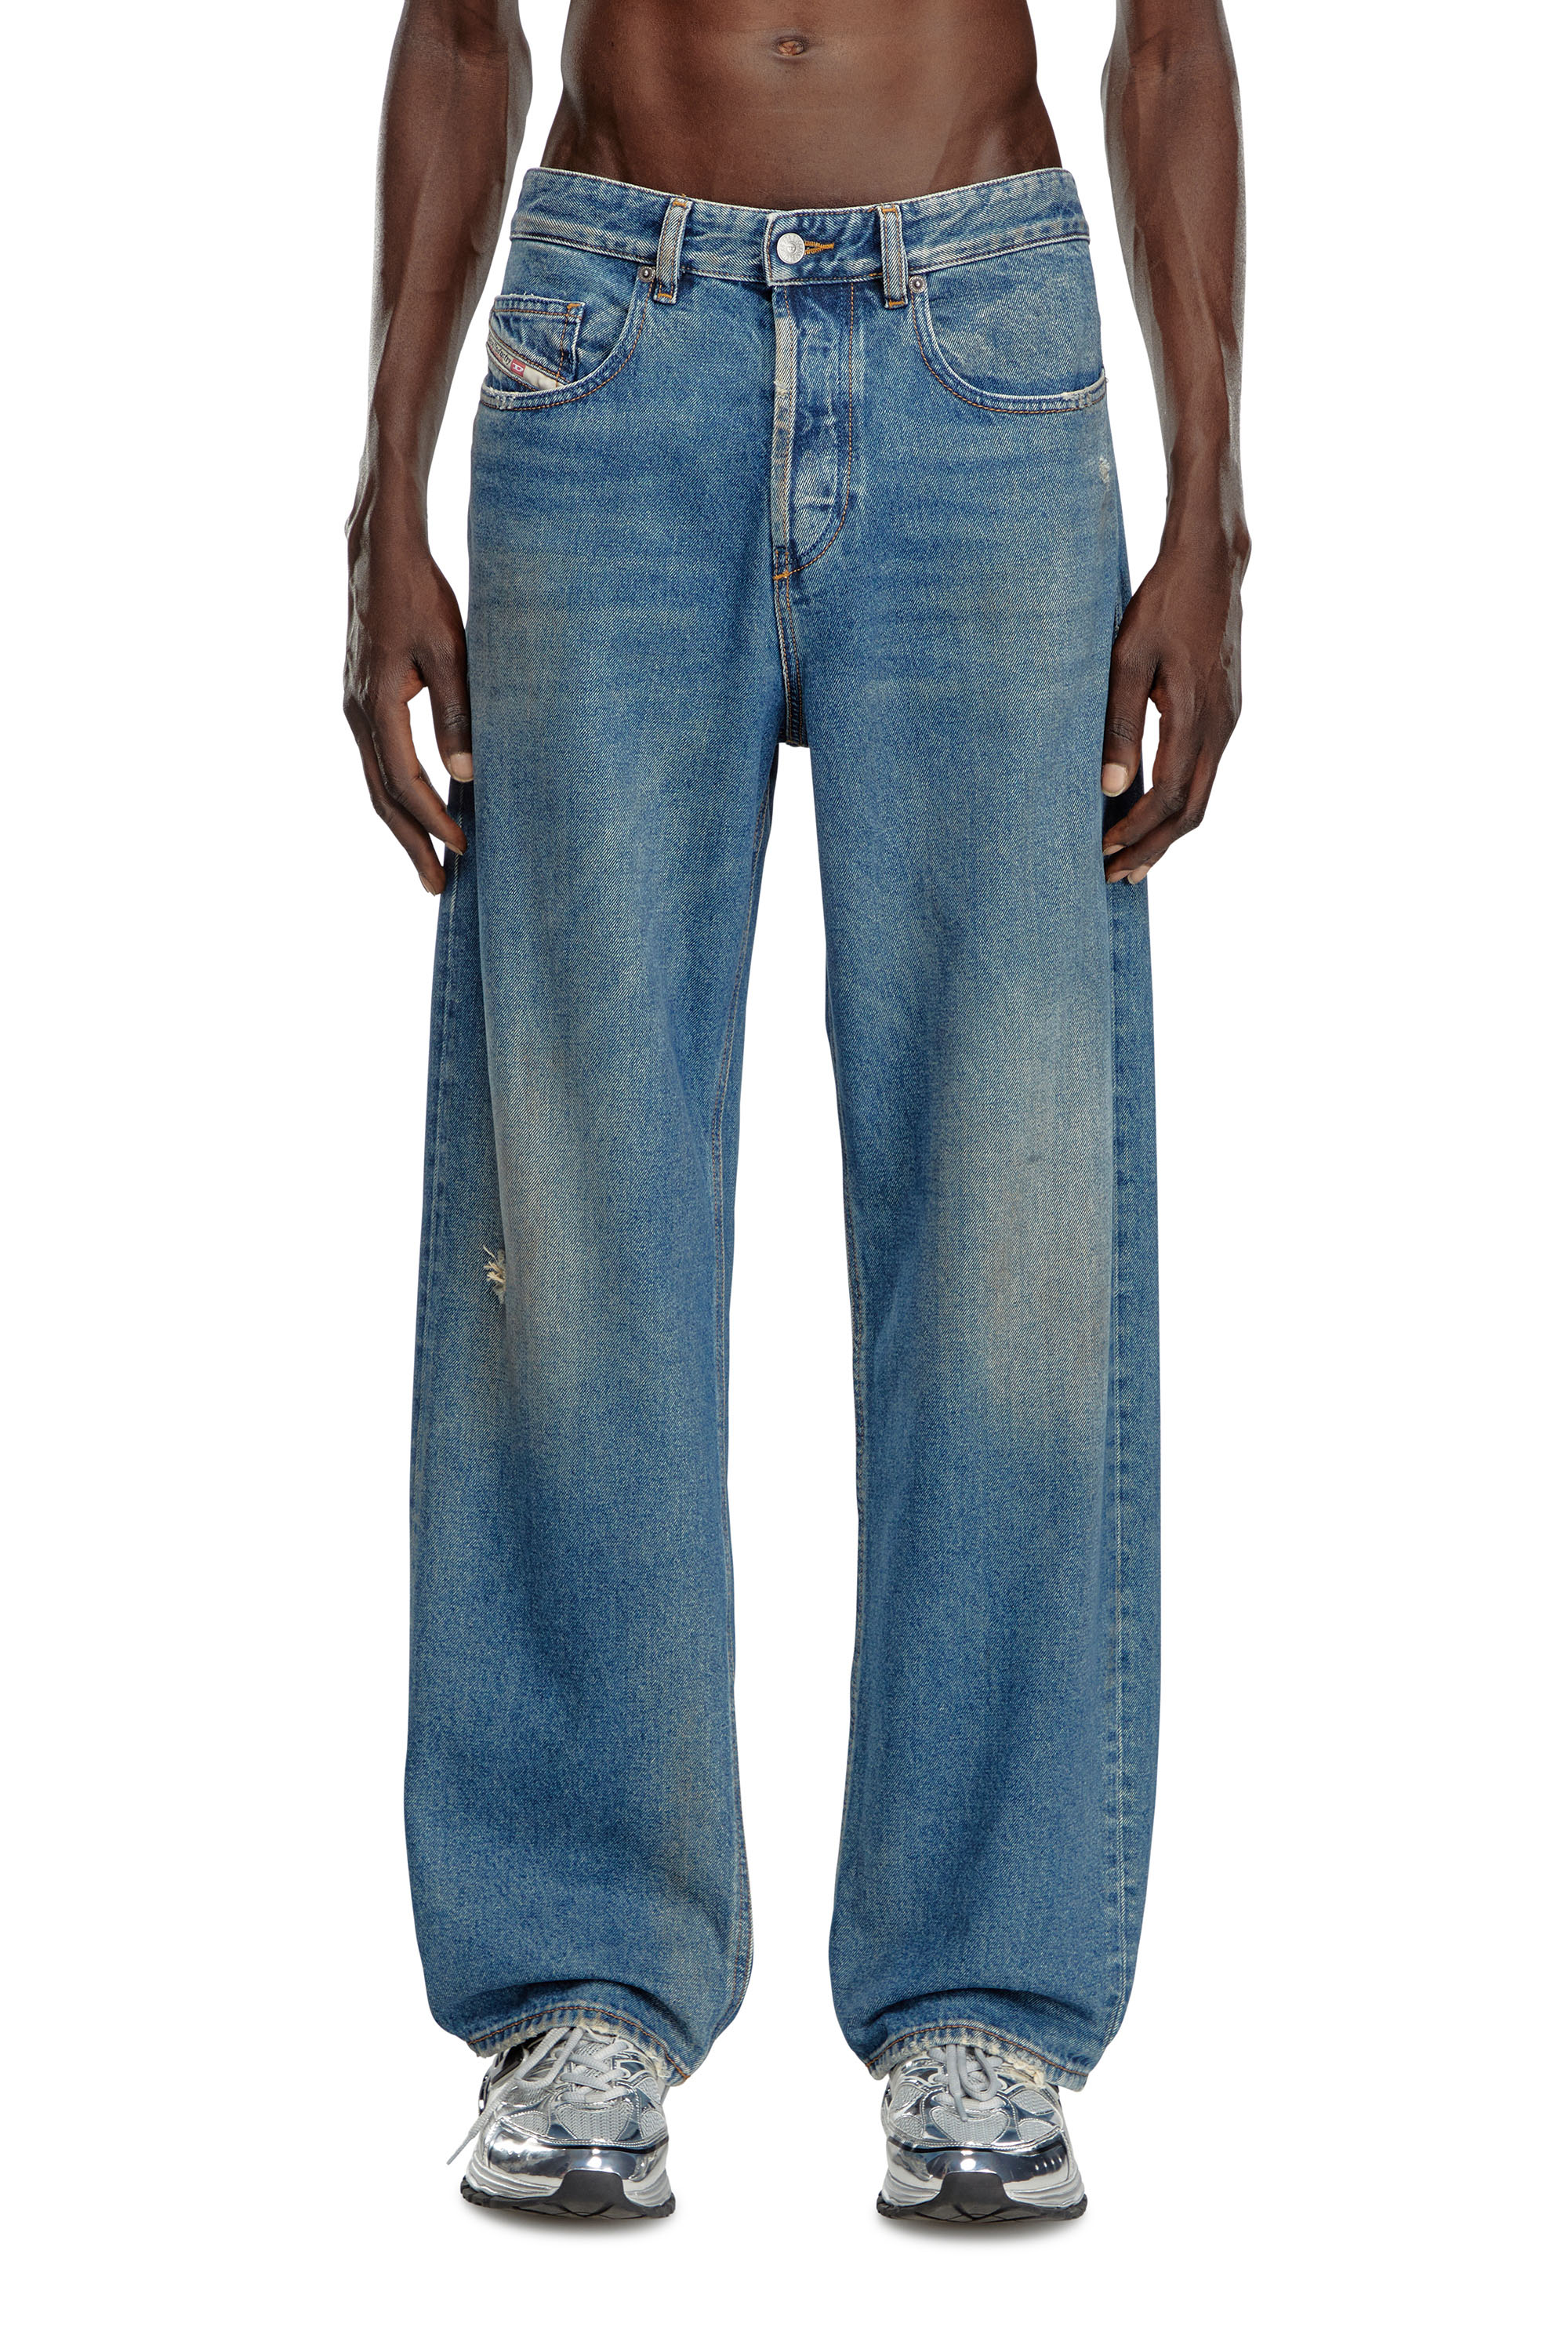 Diesel - Straight Jeans 2001 D-Macro 09J79, Hombre Straight Jeans - 2001 D-Macro in Azul marino - Image 1